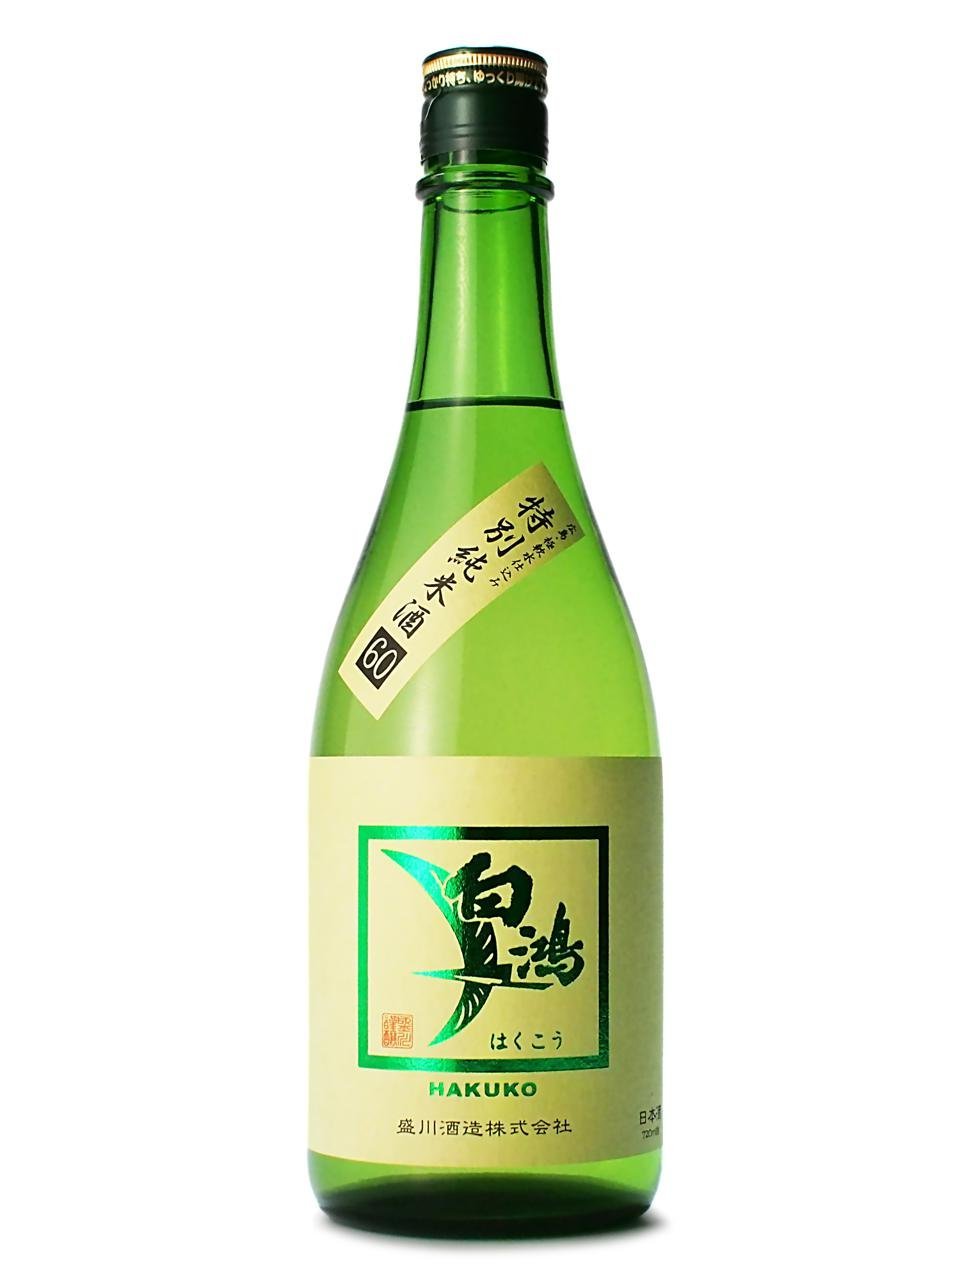 Hakuko Tokubetsu Junmai Green Label ?? ???? ? (1x30cl) - TwoMoreGlasses.com